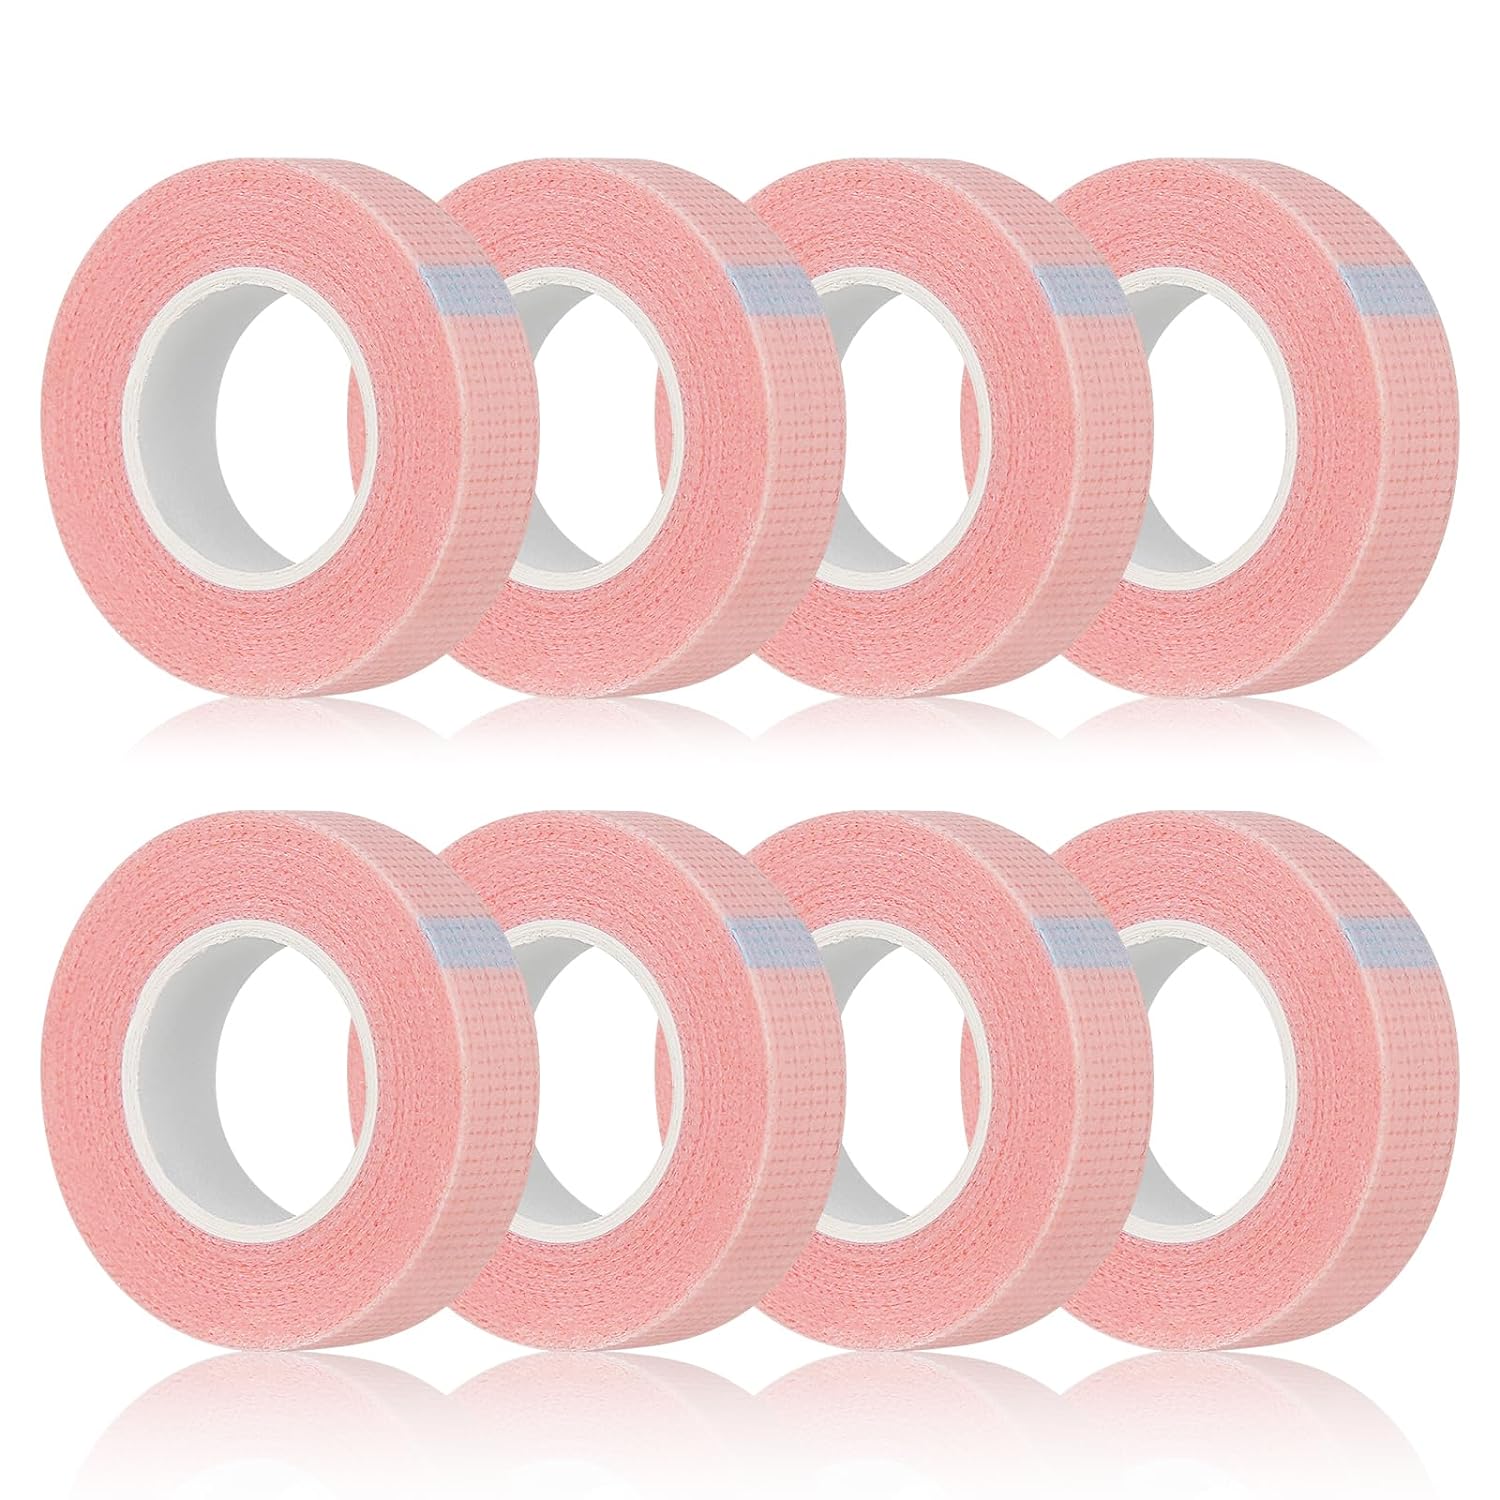 8 Rolls Lash Tape 9m/10 Yard Pink Adhesive Eyelash Tape Breathable Fabric Eyelash Extension Tape